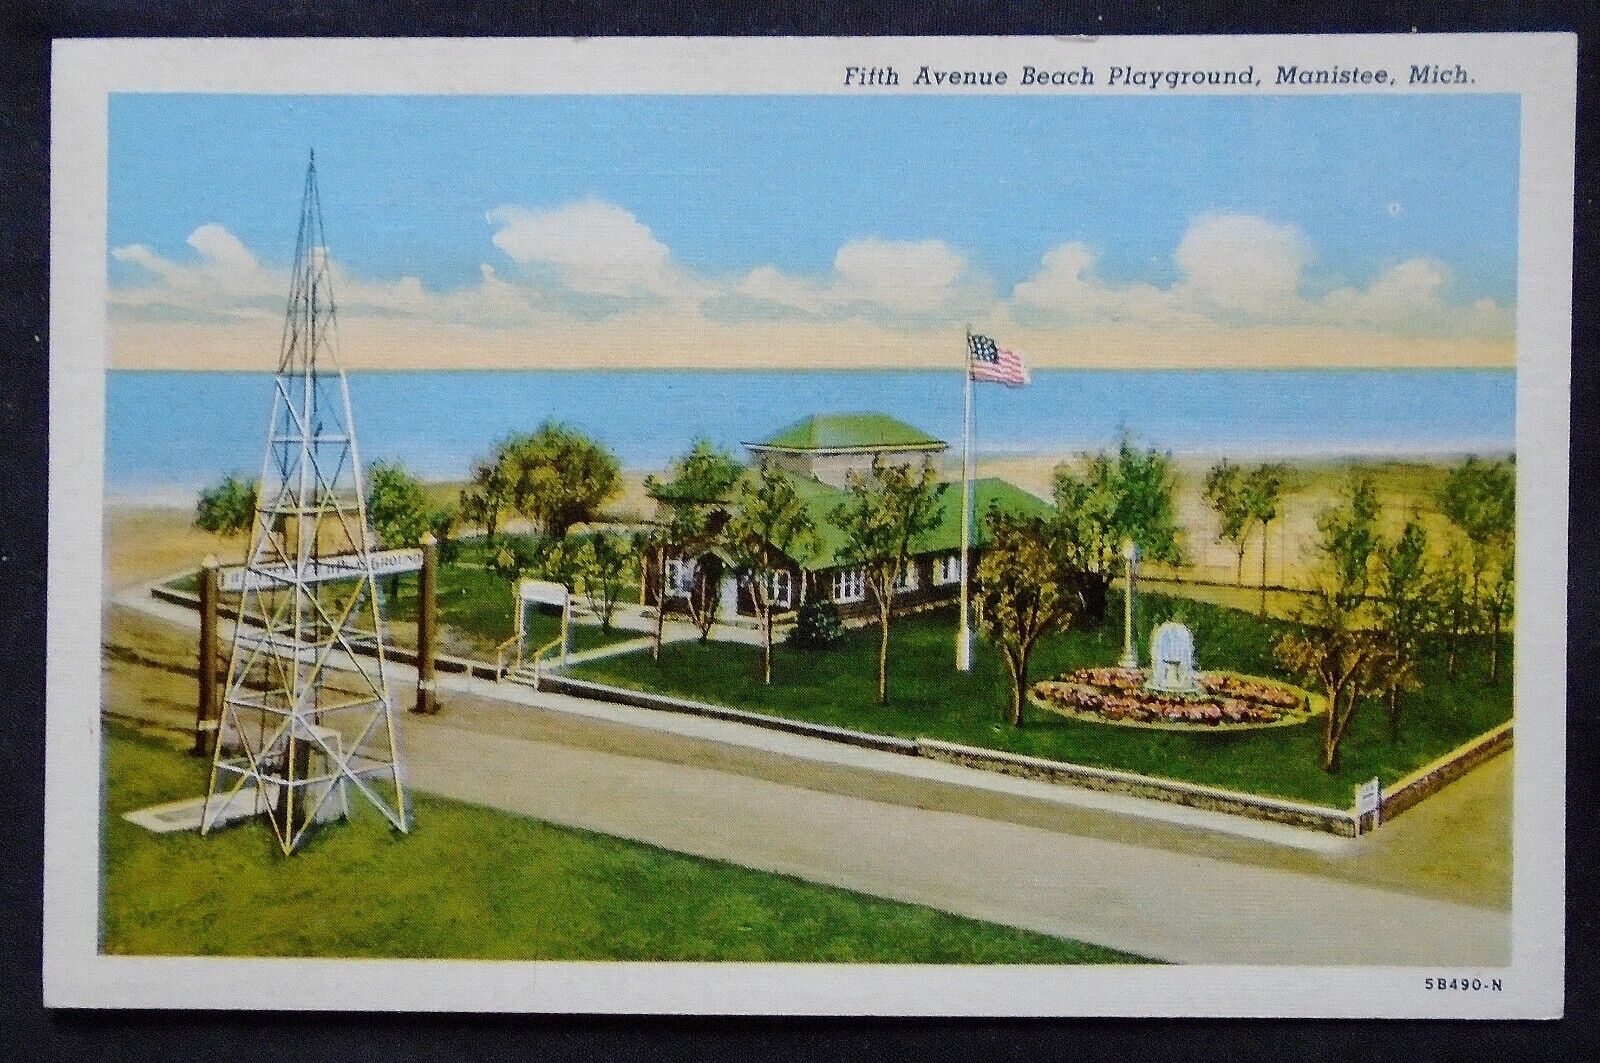 Manistee, MI, Fifth Avenue Beach Playground, circa 1930\'s-40\'s